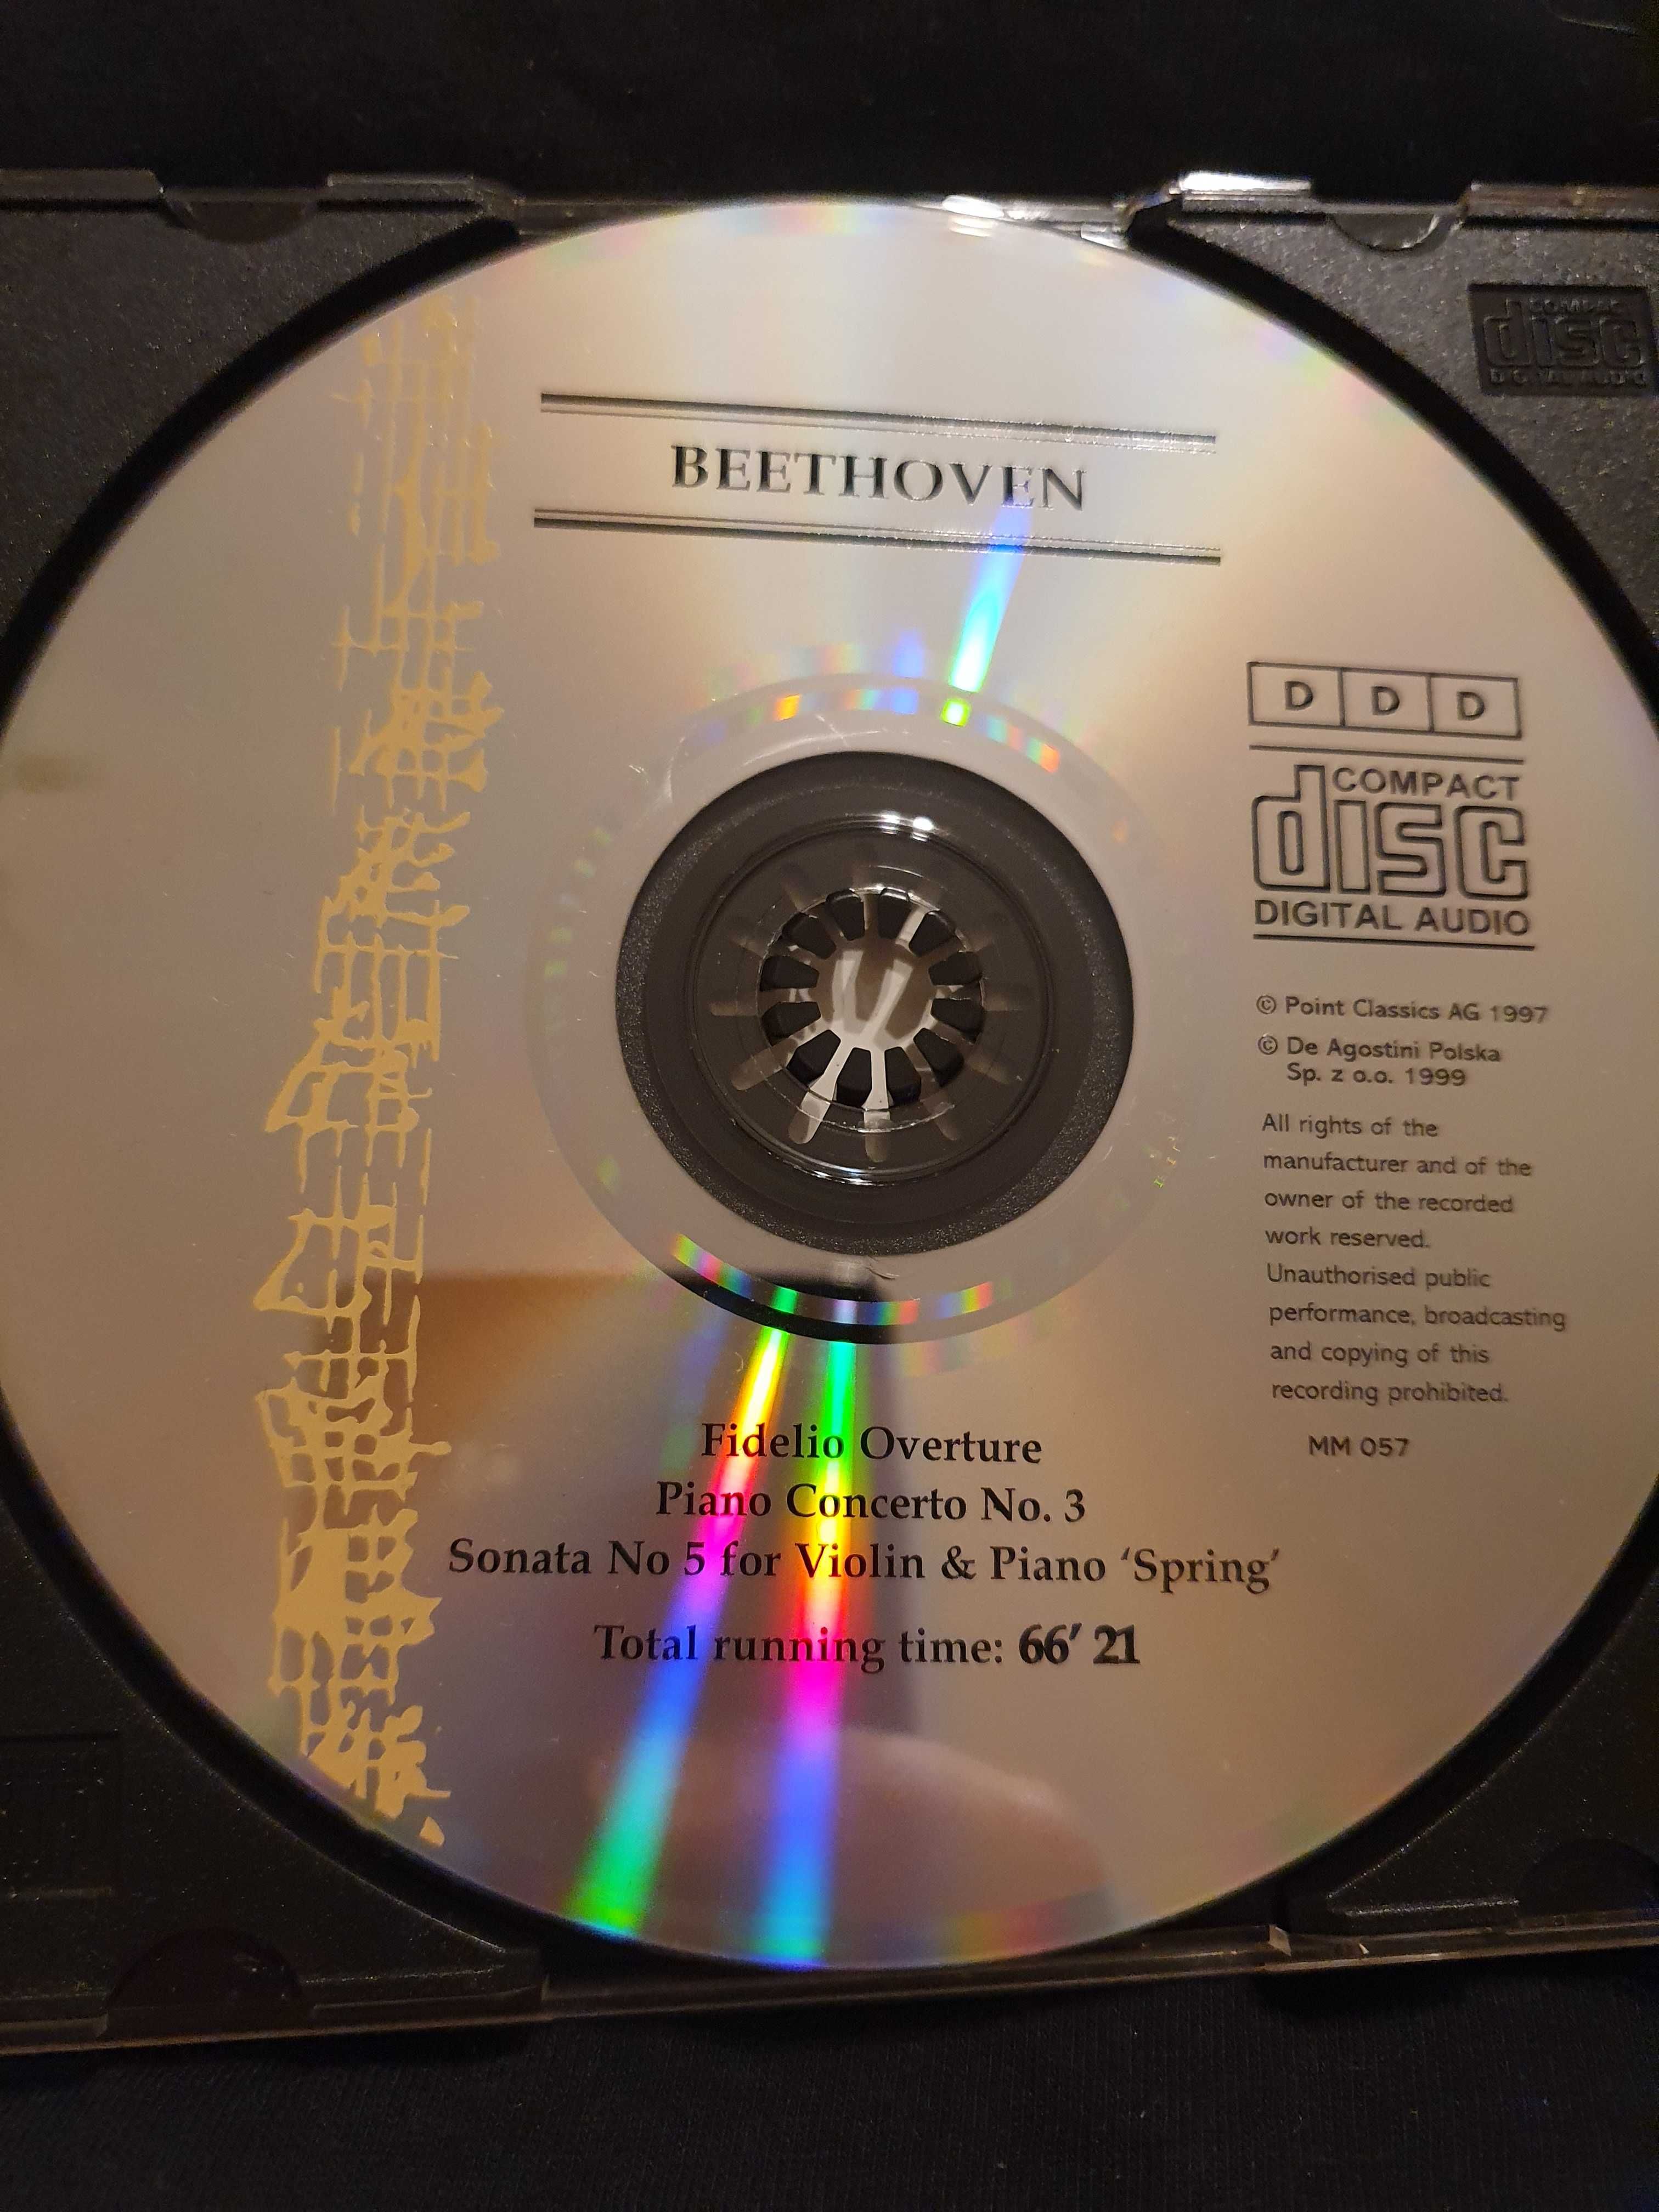 Płyta cd Muzyka mistrzow - Beethoven